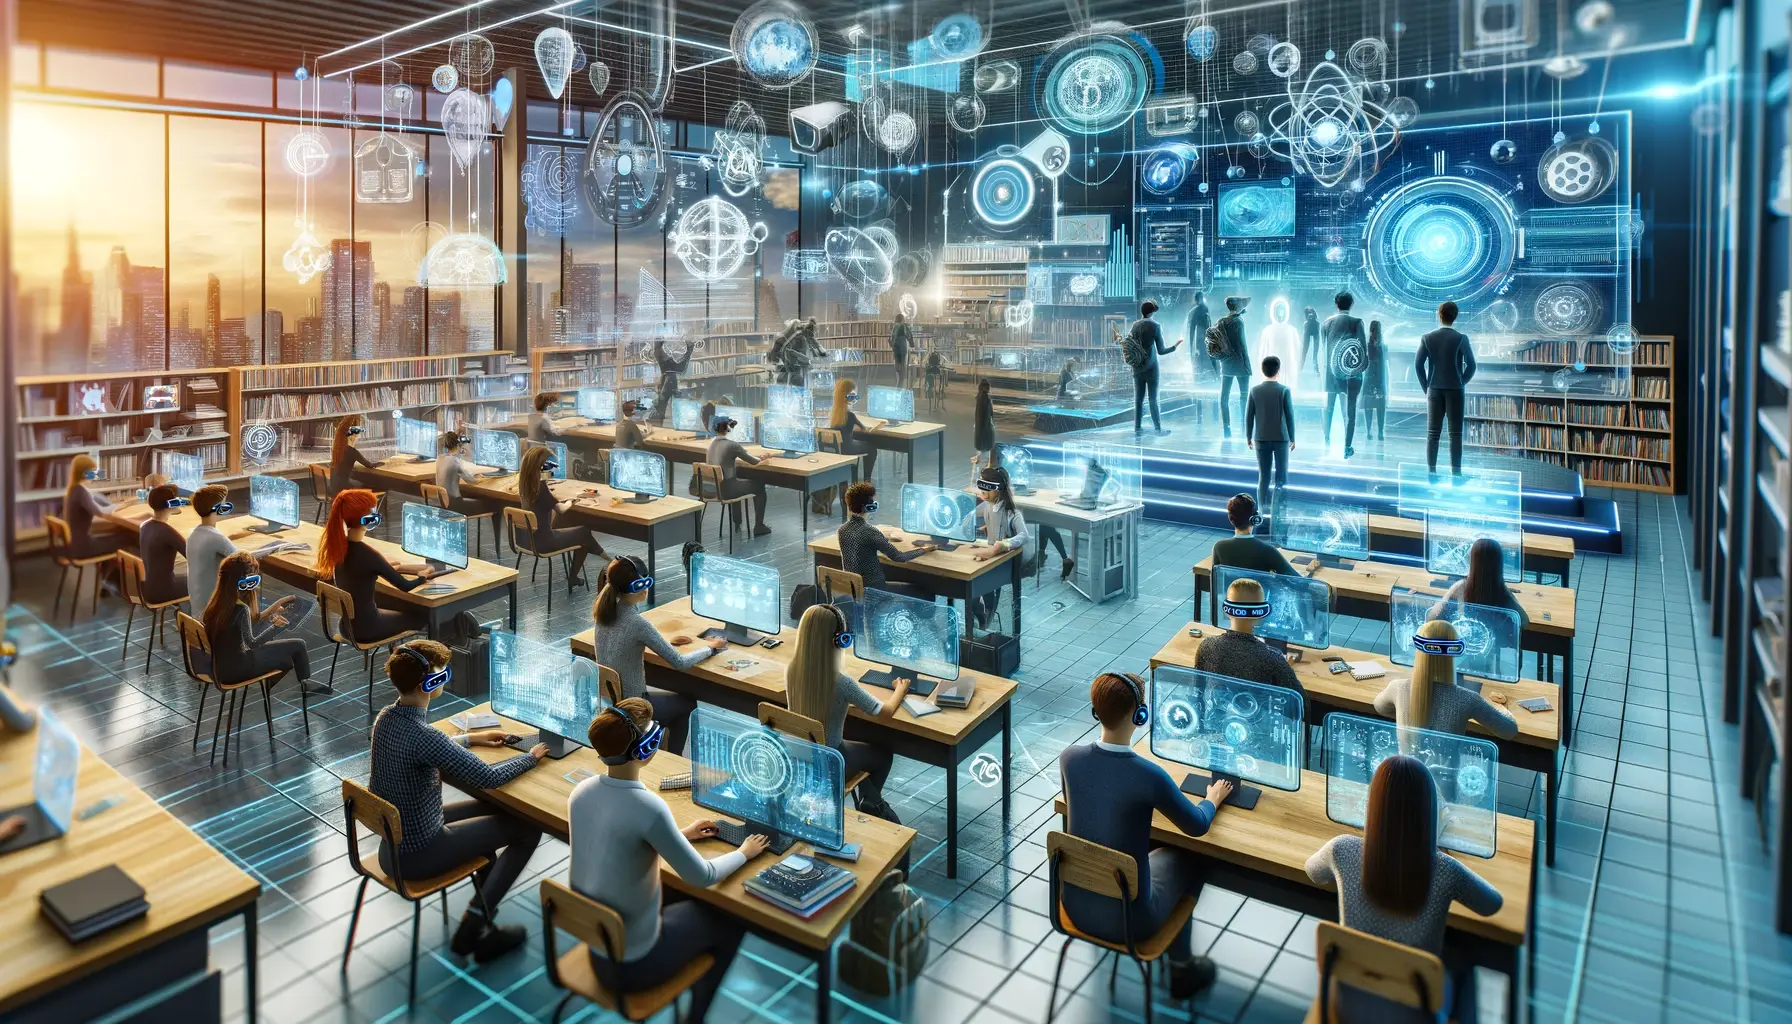 Tech classroom - futuristic illustration